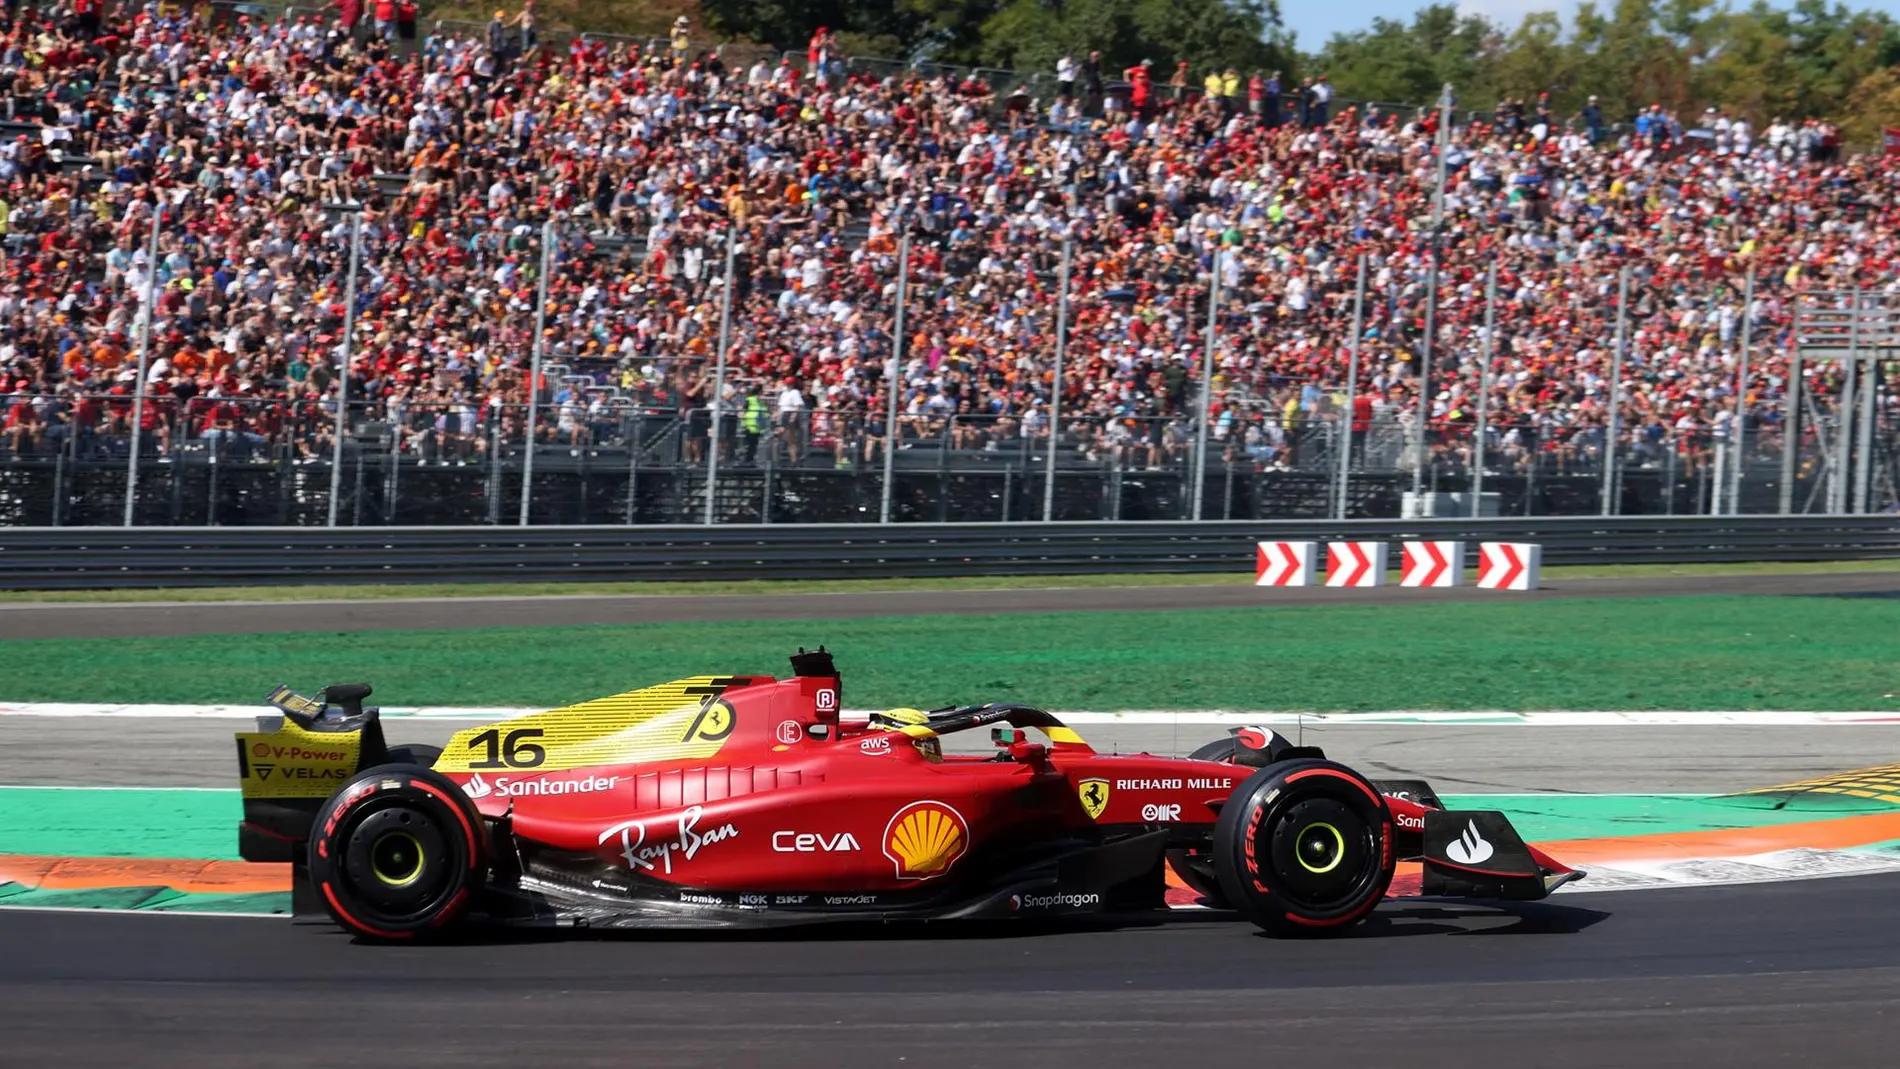 Leclerc consigue la pole y vuelve a sonreír en Monza, Sainz 18º tras penalizar y Alonso partirá 6º